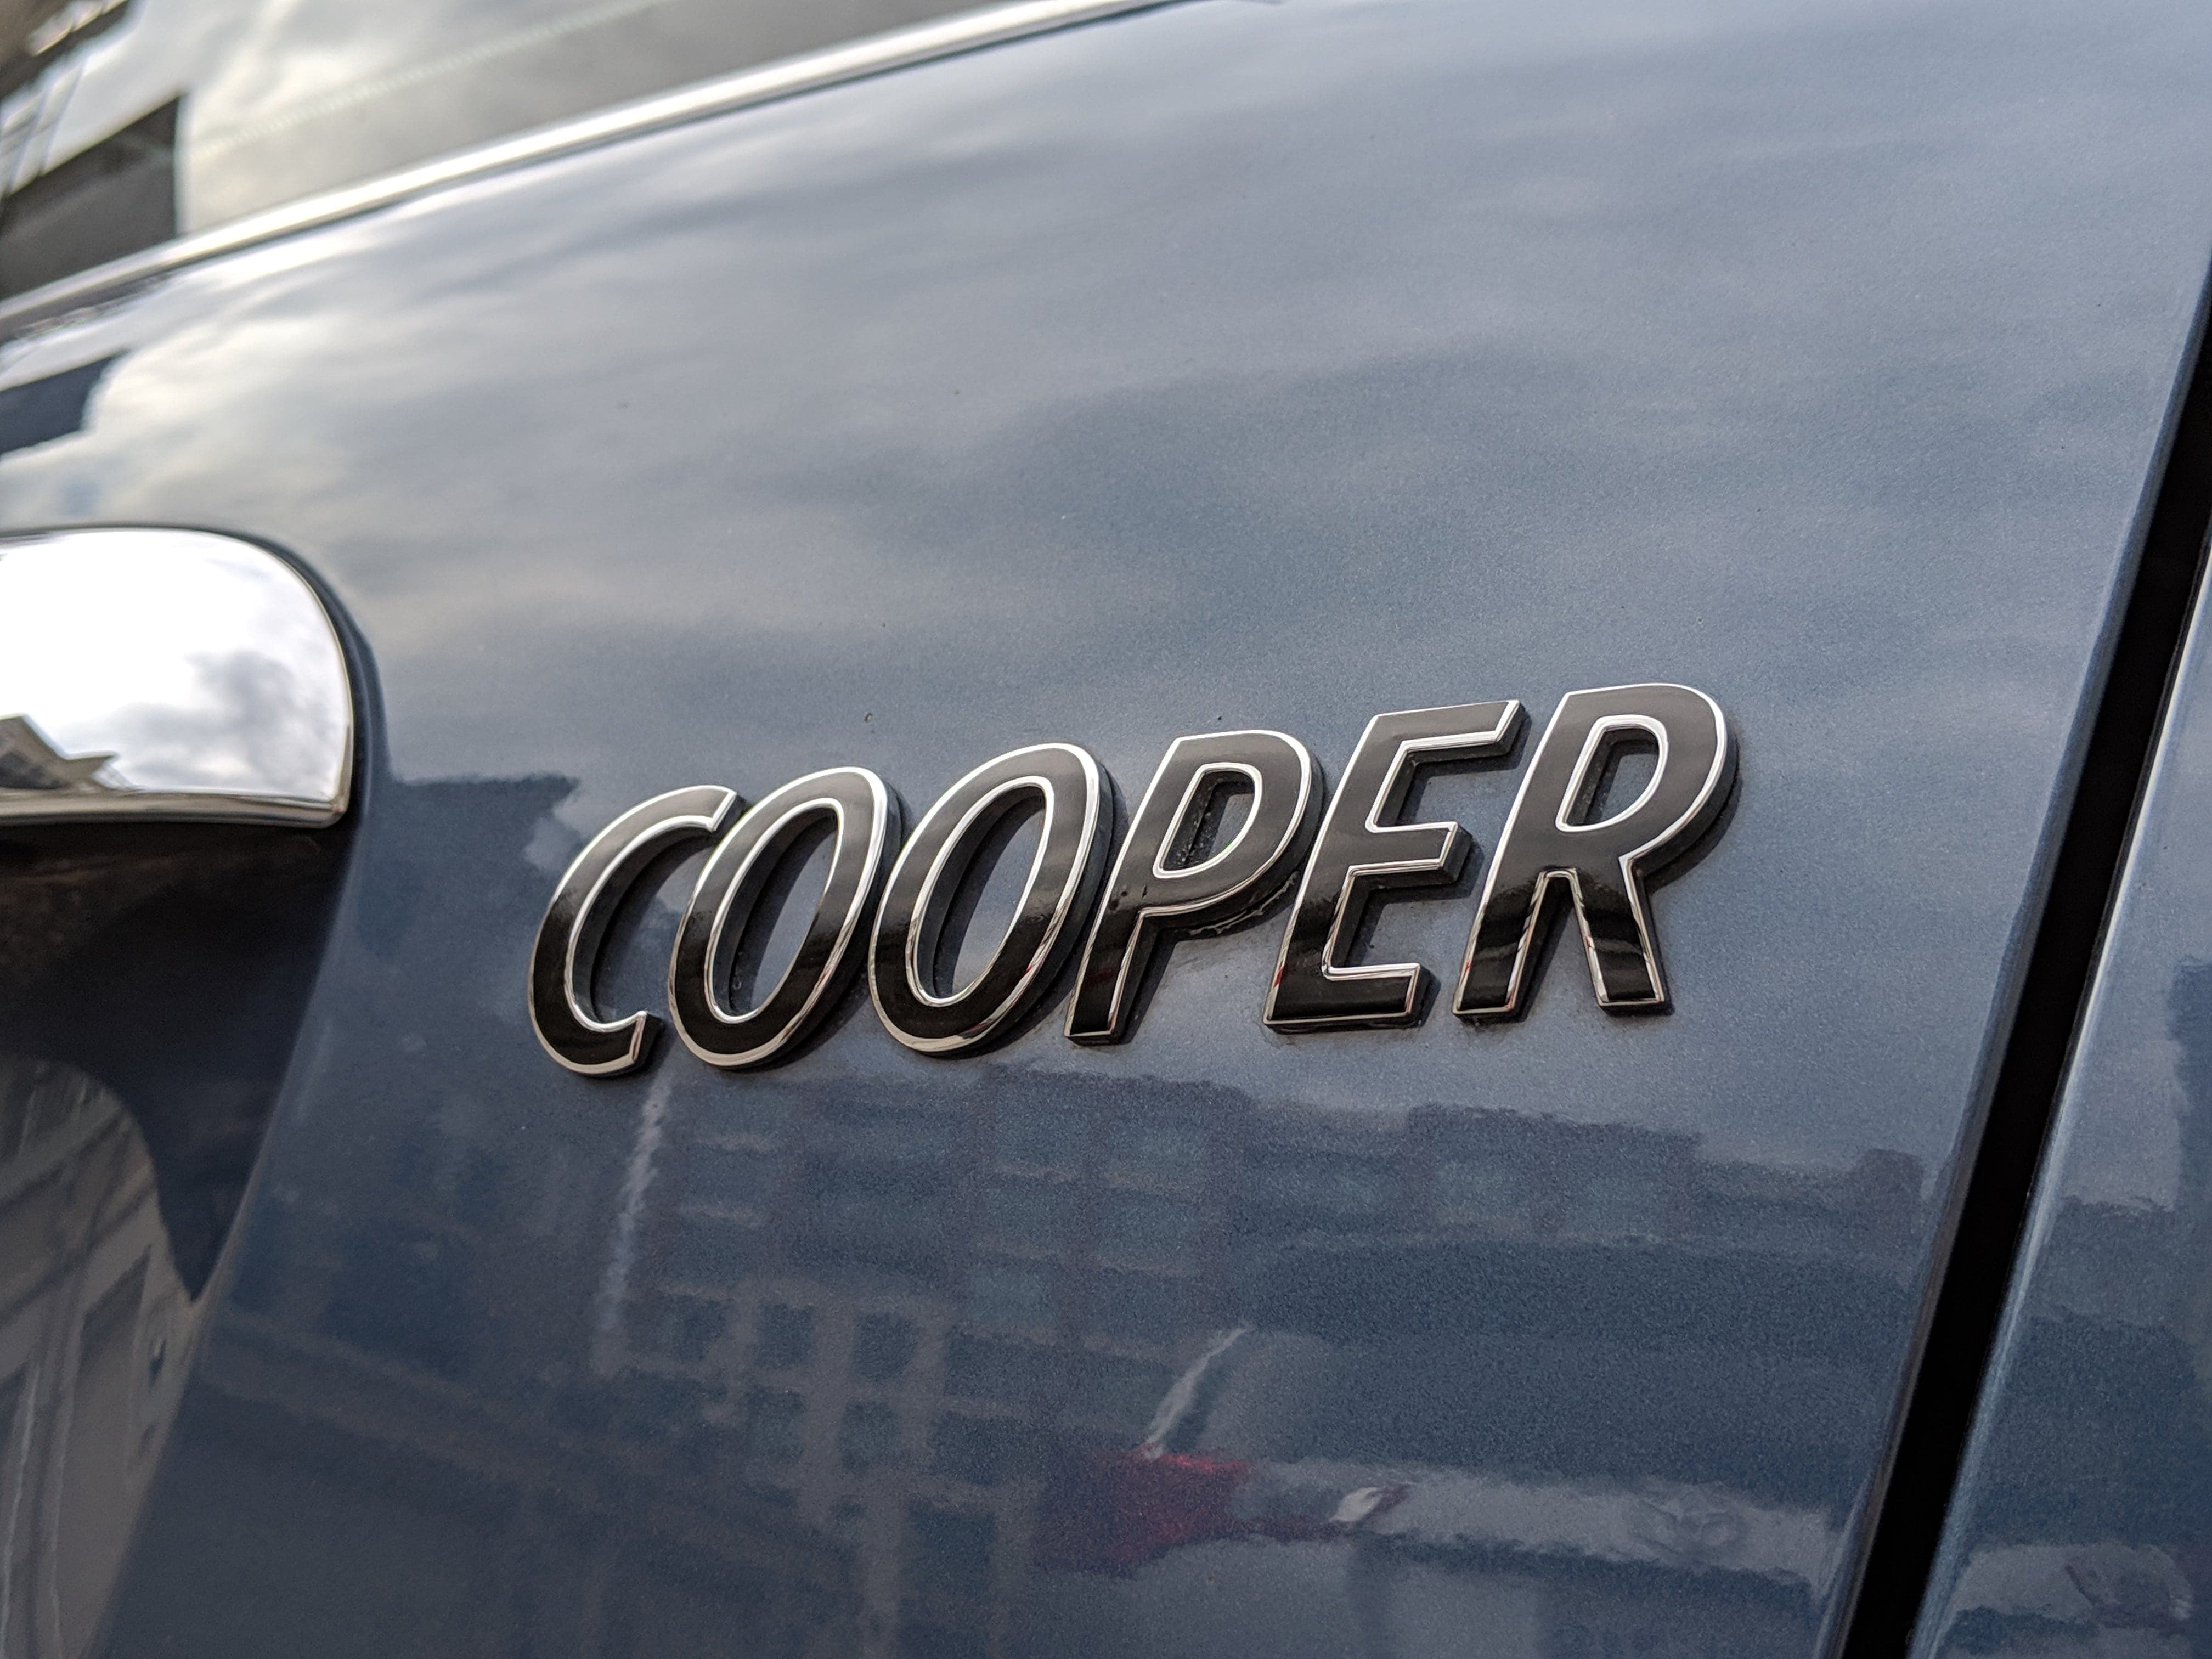 Mini Cooper - Cooper Rear Emblem Overlay - VinylMod